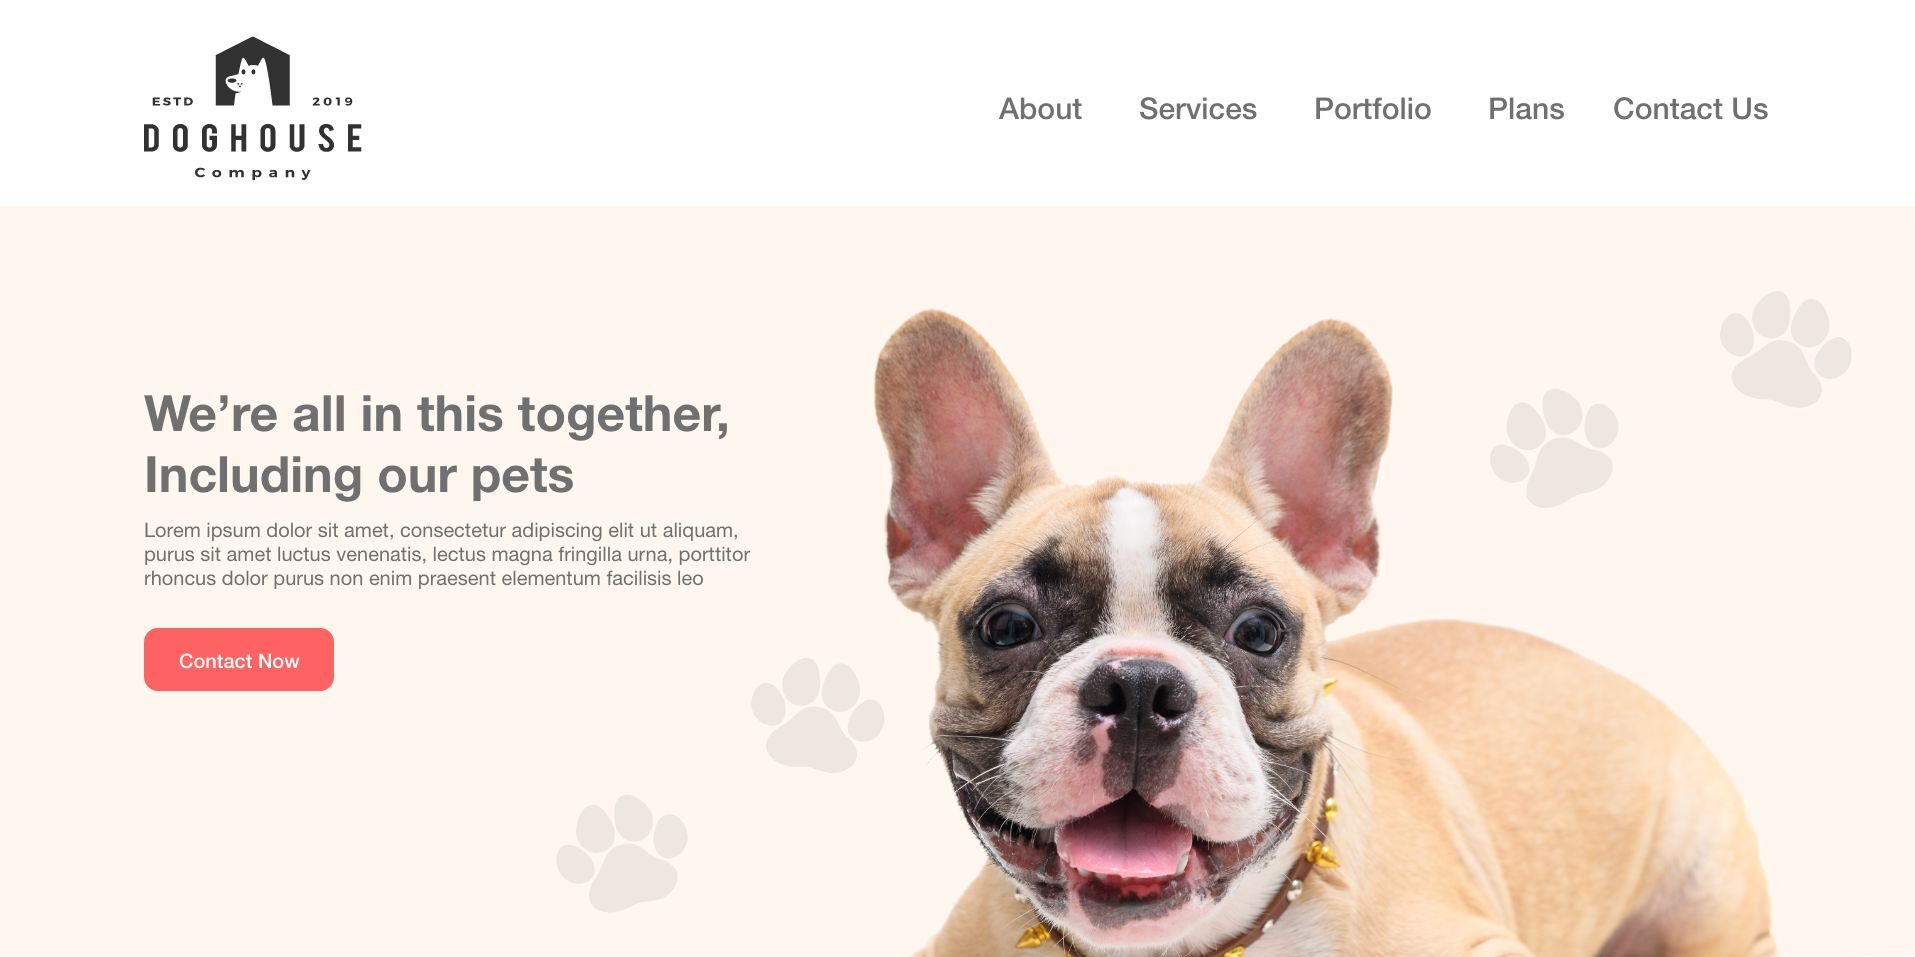 Pet Shop Website Design